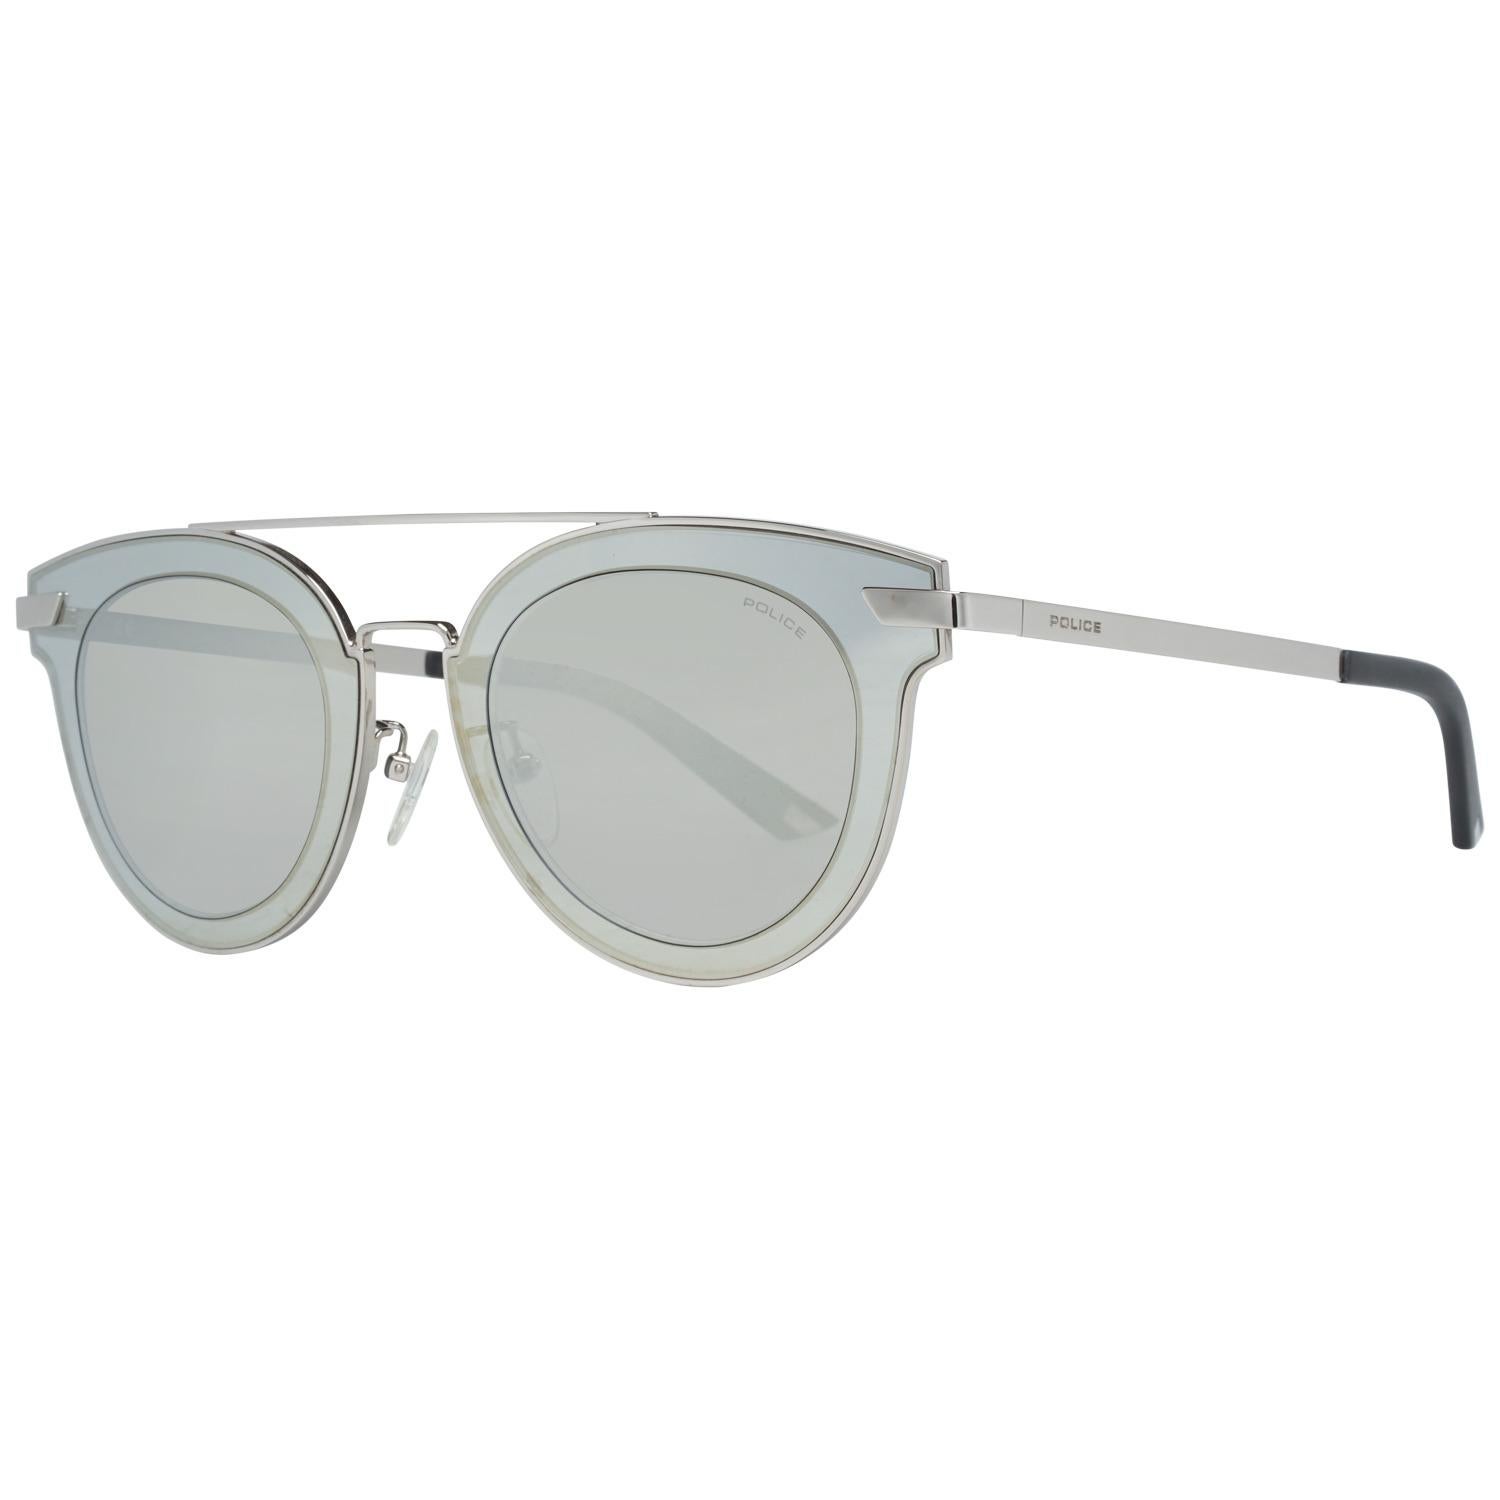 Police Mint Unisex Silver Sunglasses SPL349 47579K 47-24-145 mm 1